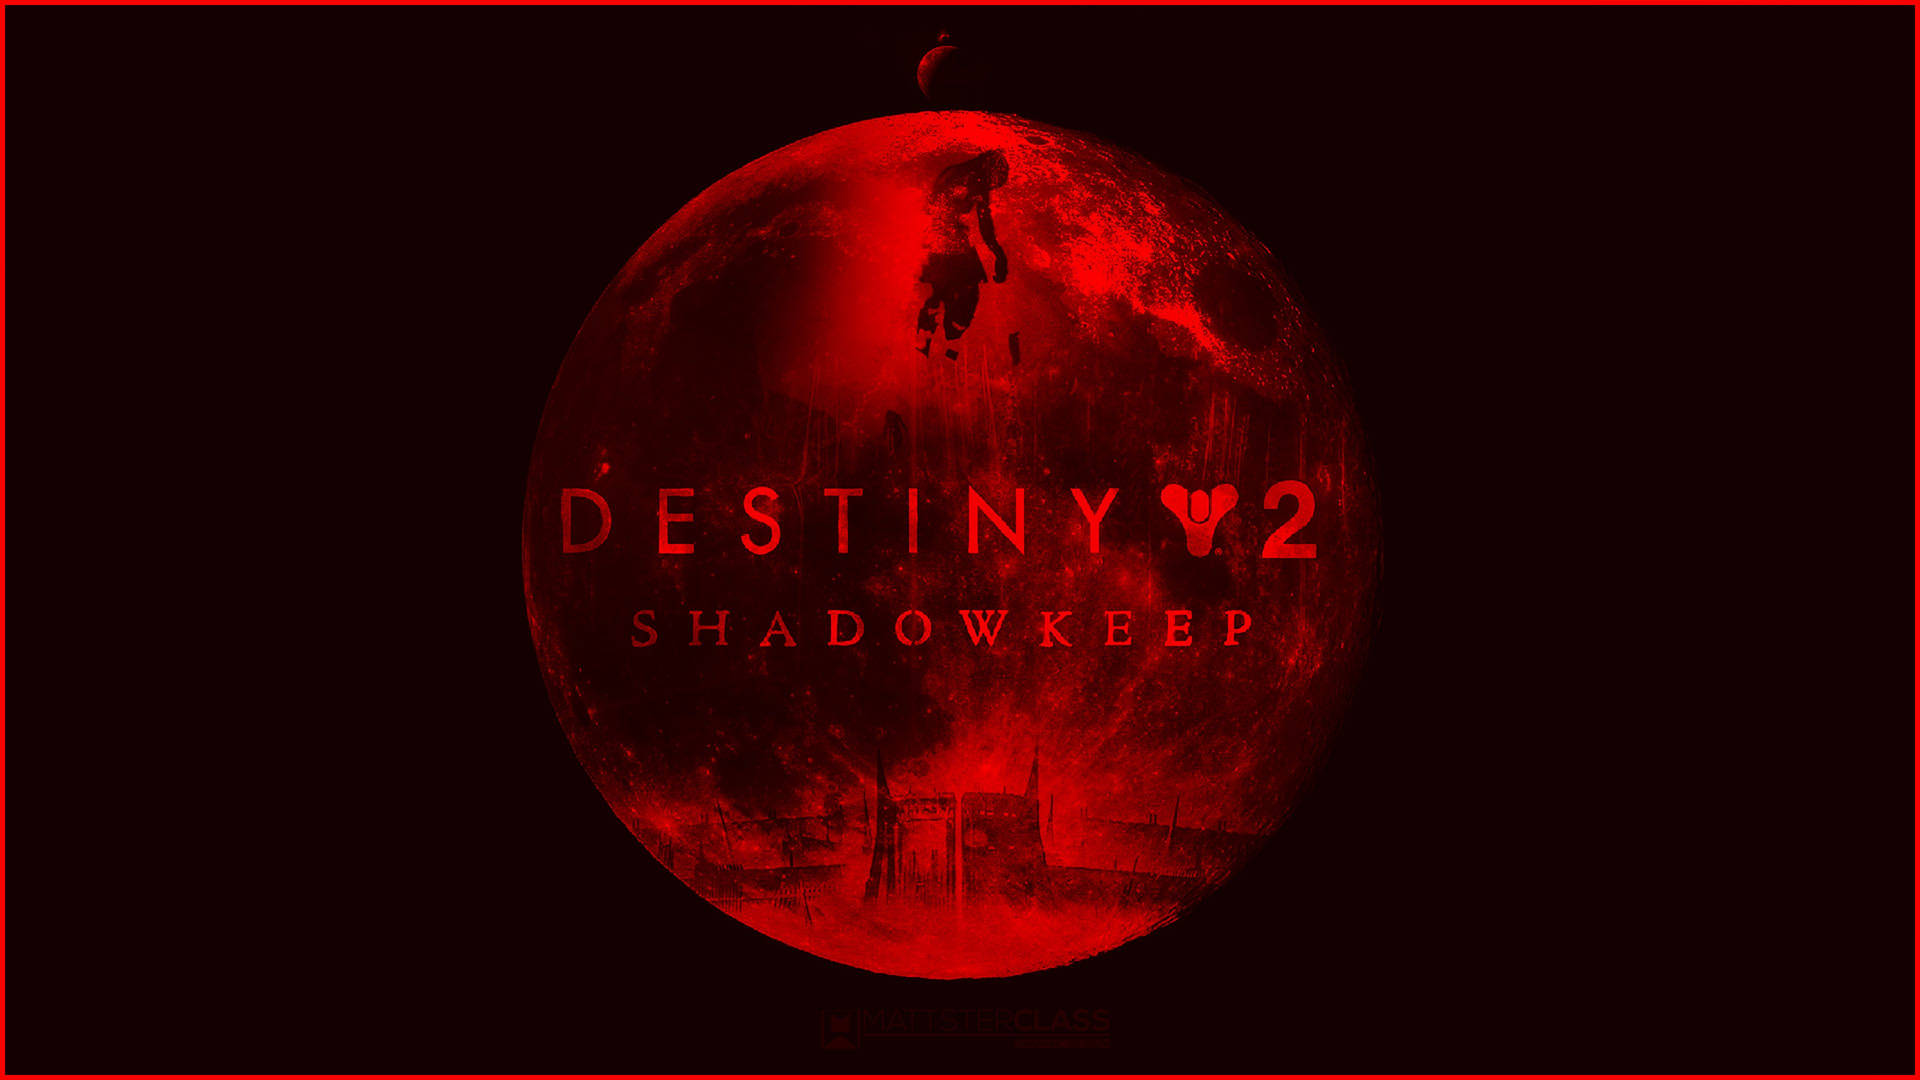 Destiny 2 Shadowkeep Red Moon Wallpaper